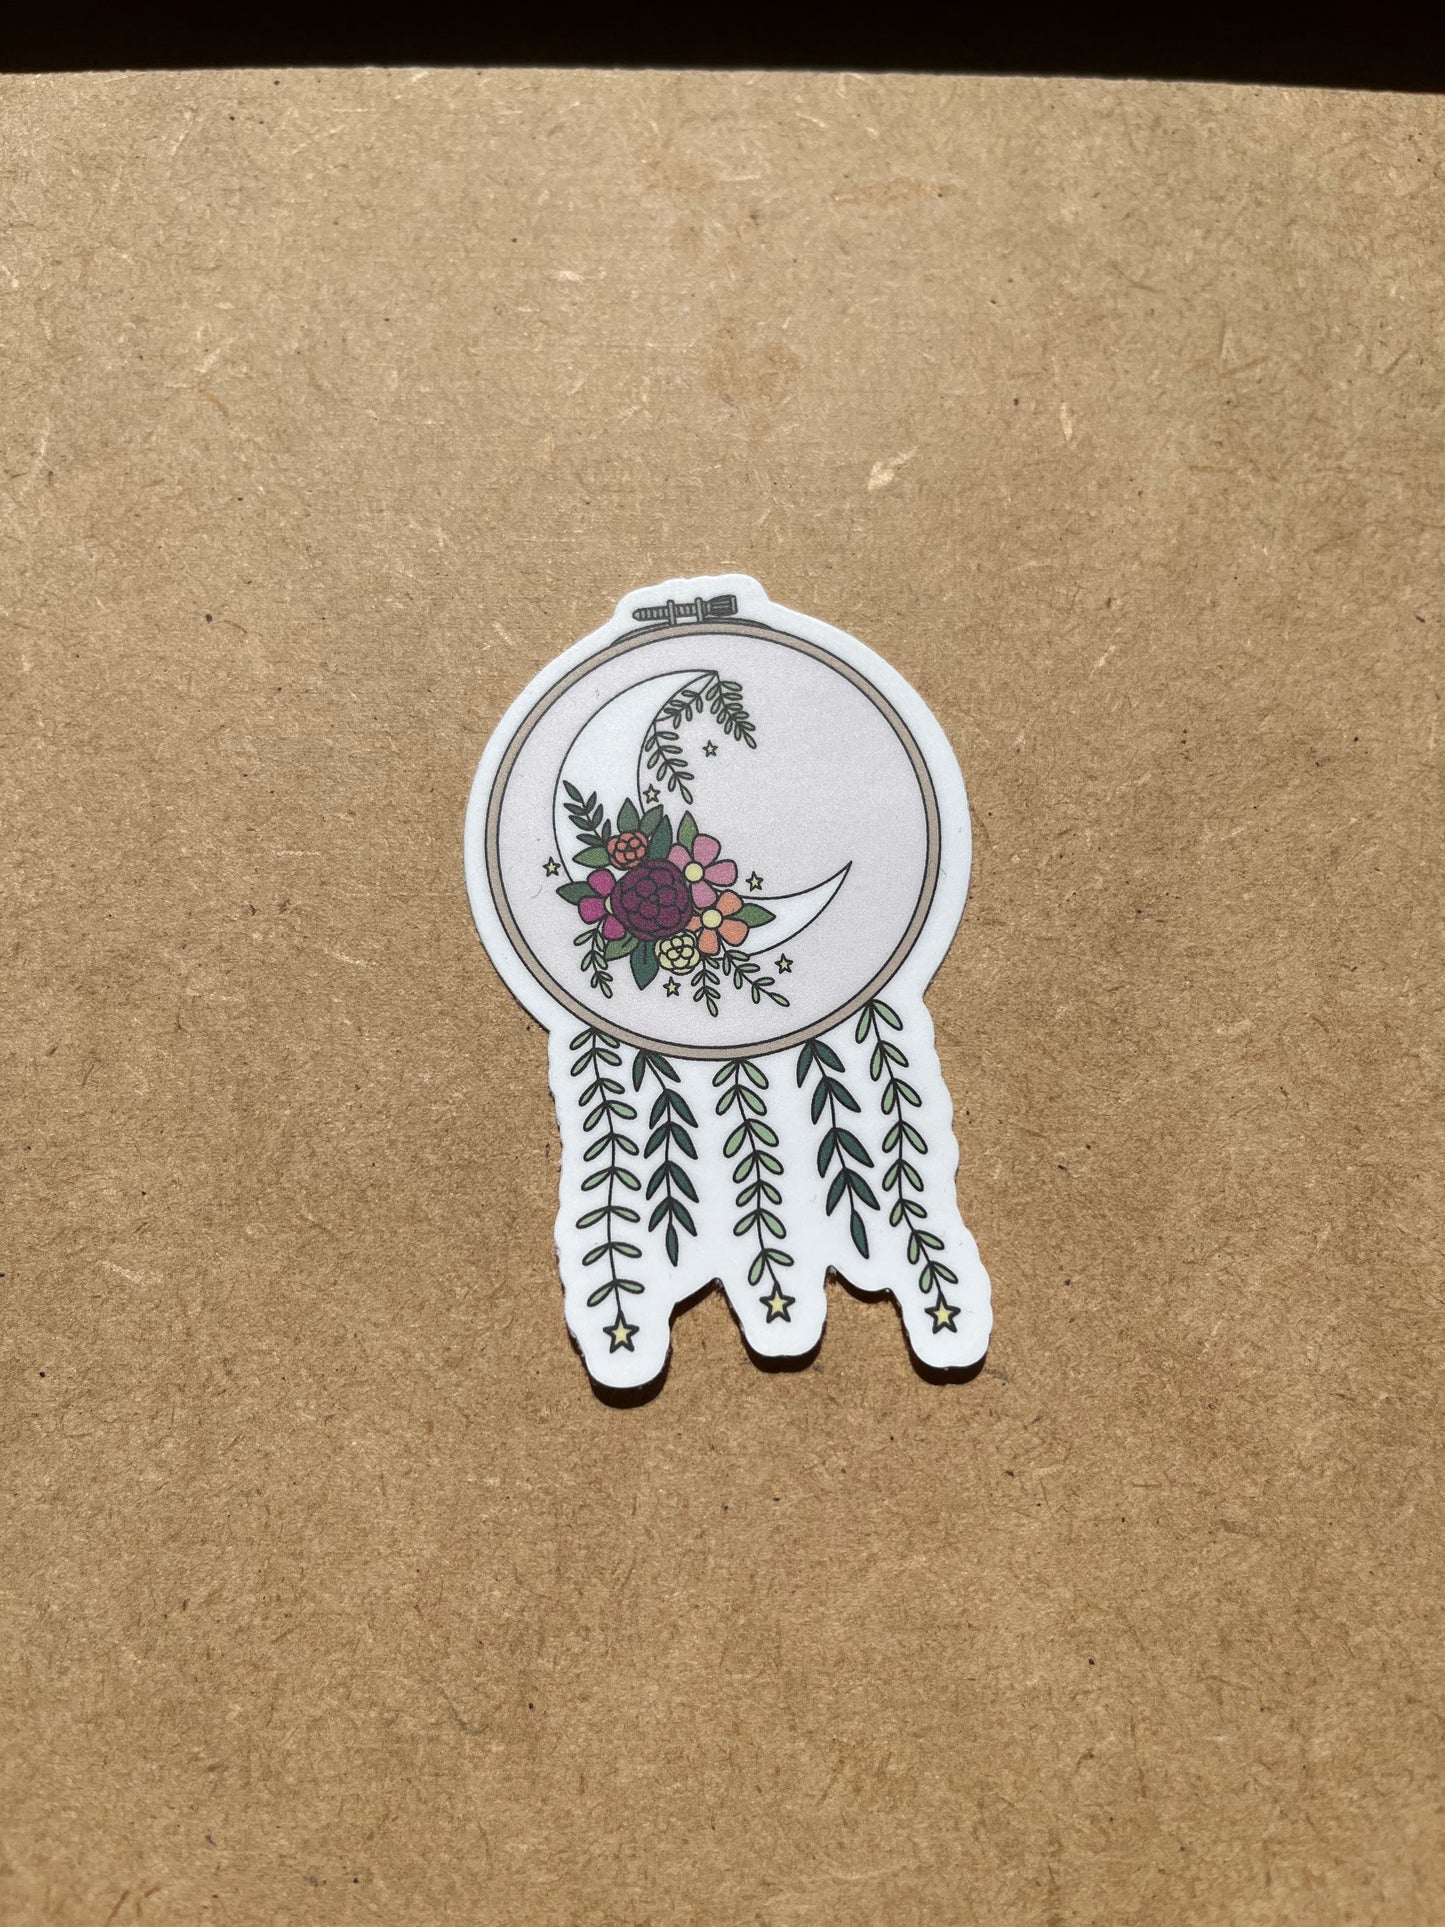 Moon and Florals Embroidery Hoop Vinyl Waterproof Sticker